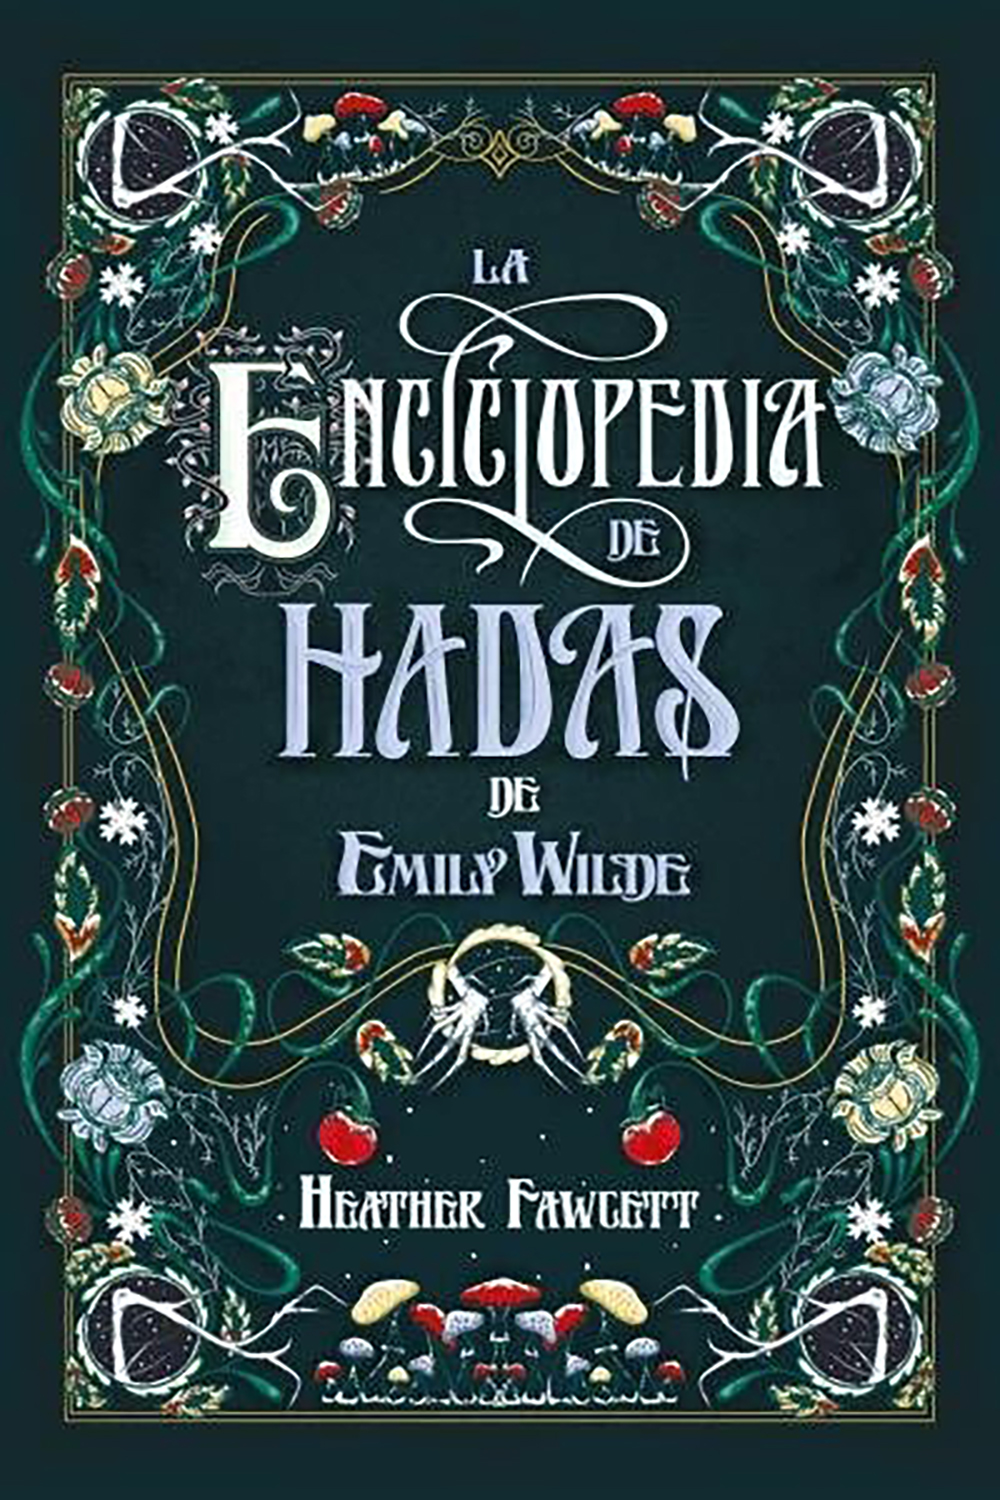 La enciclopedia de hadas de Emily Wilde | Heather Fawgett | Umbriel